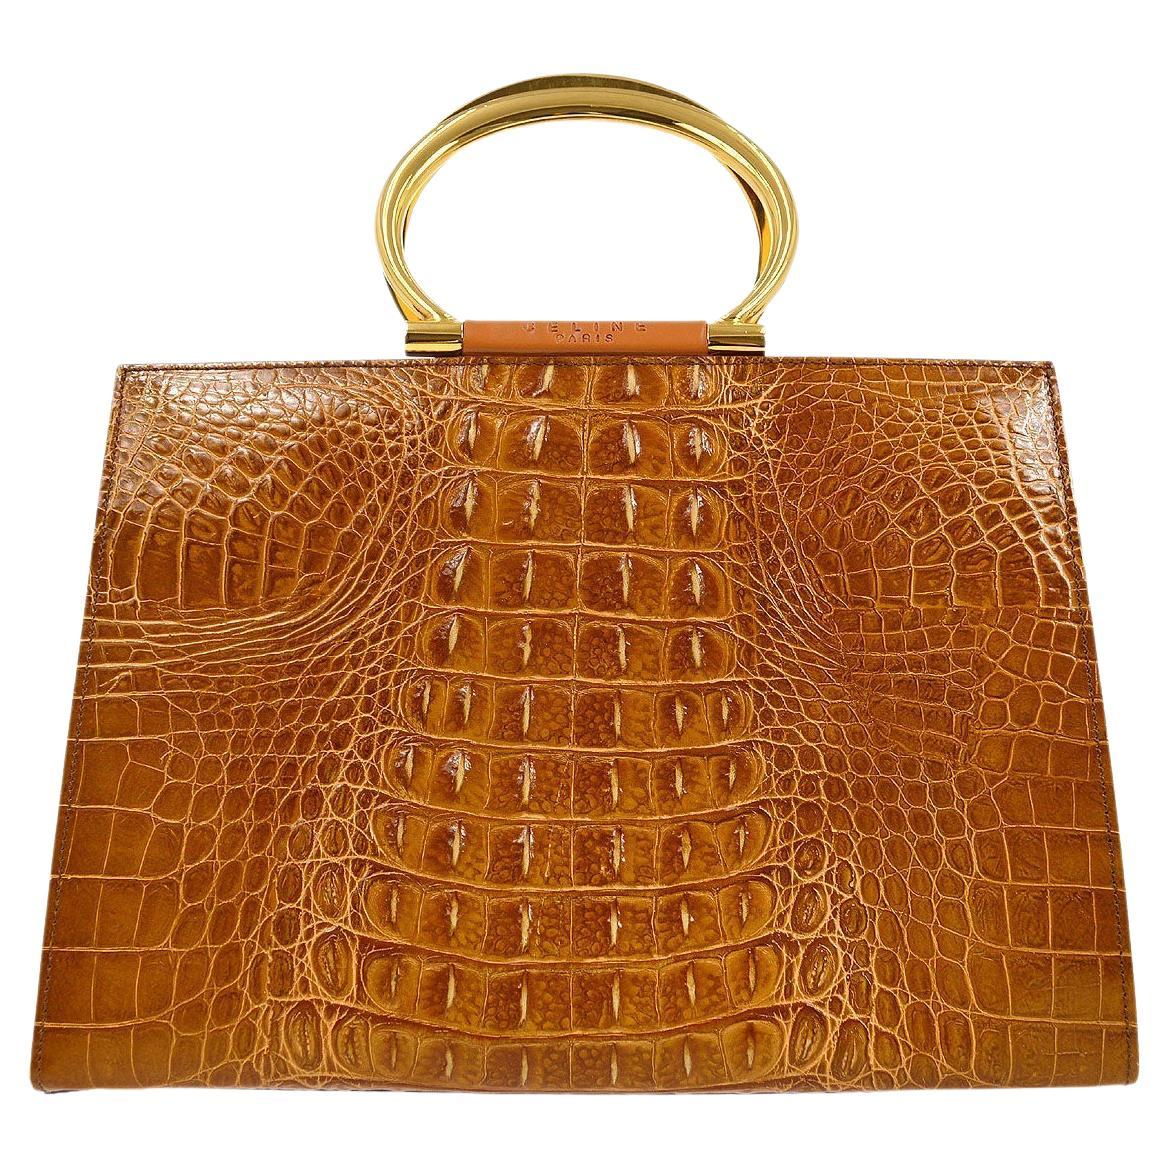 CELINE Cognac Tan Crocodile Exotic Leather Gold Top Handle Carryall Tote Bag